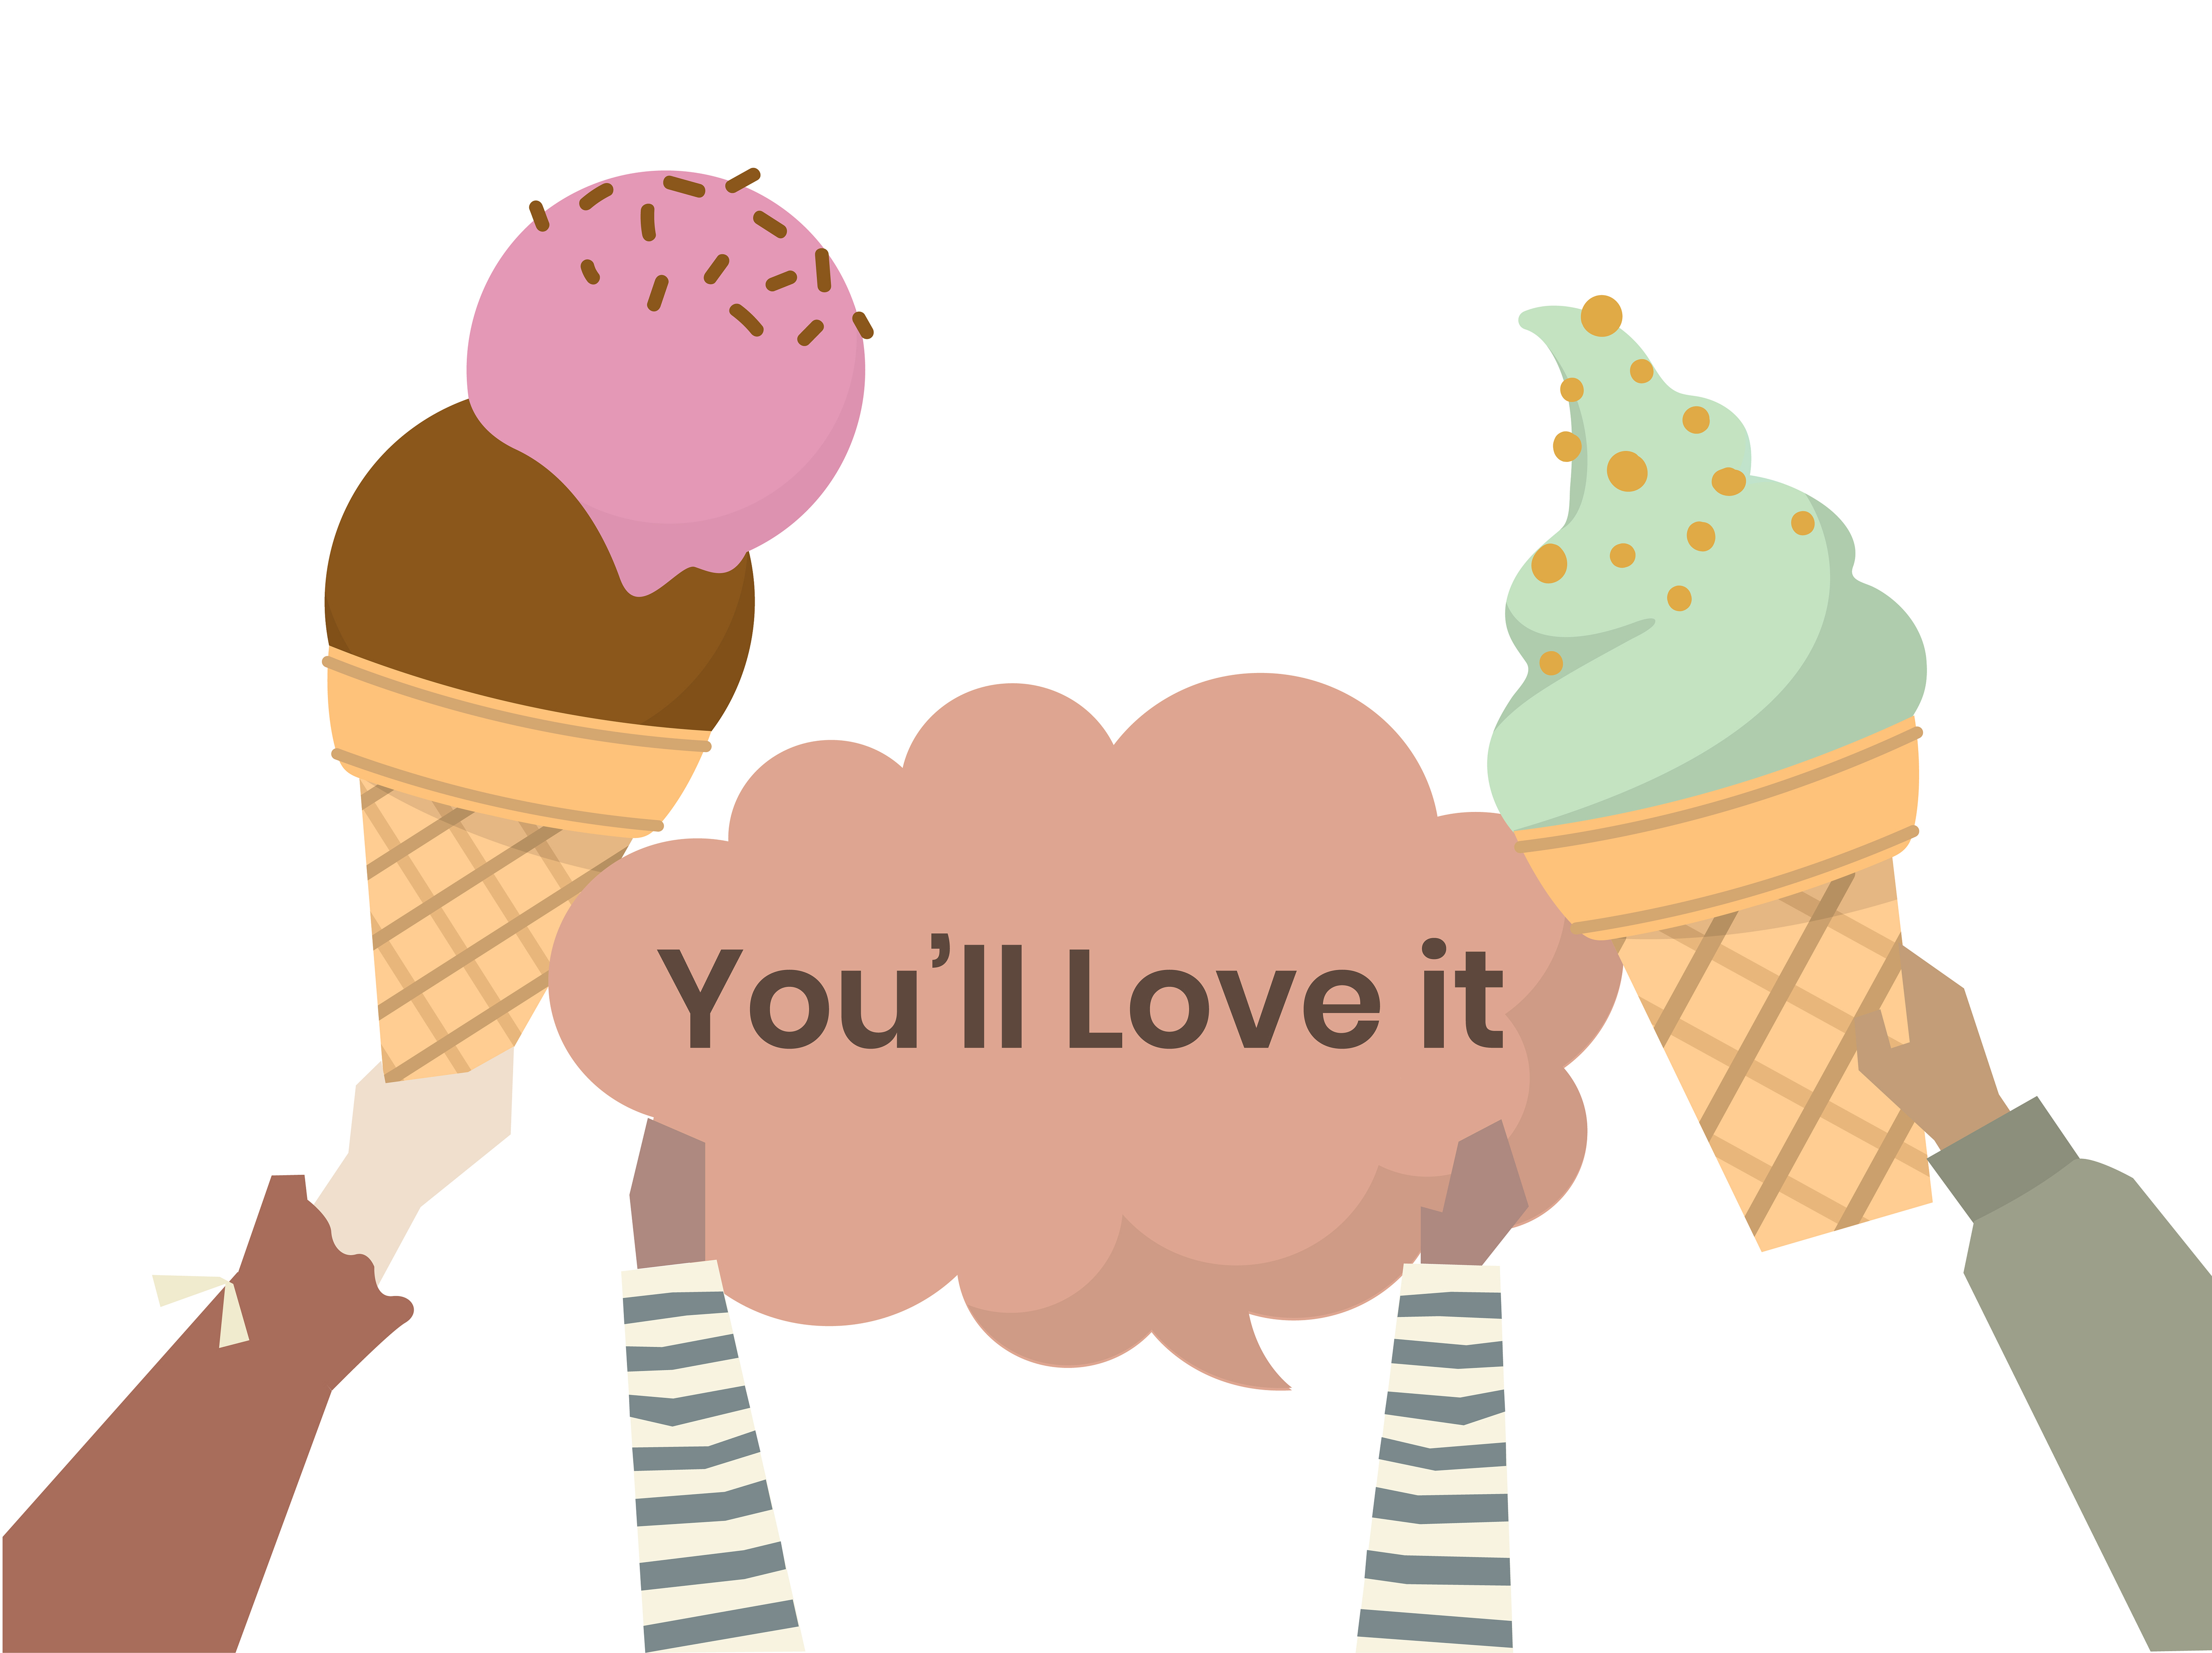 illustration-of-ice-cream-cones-download-free-vectors-clipart